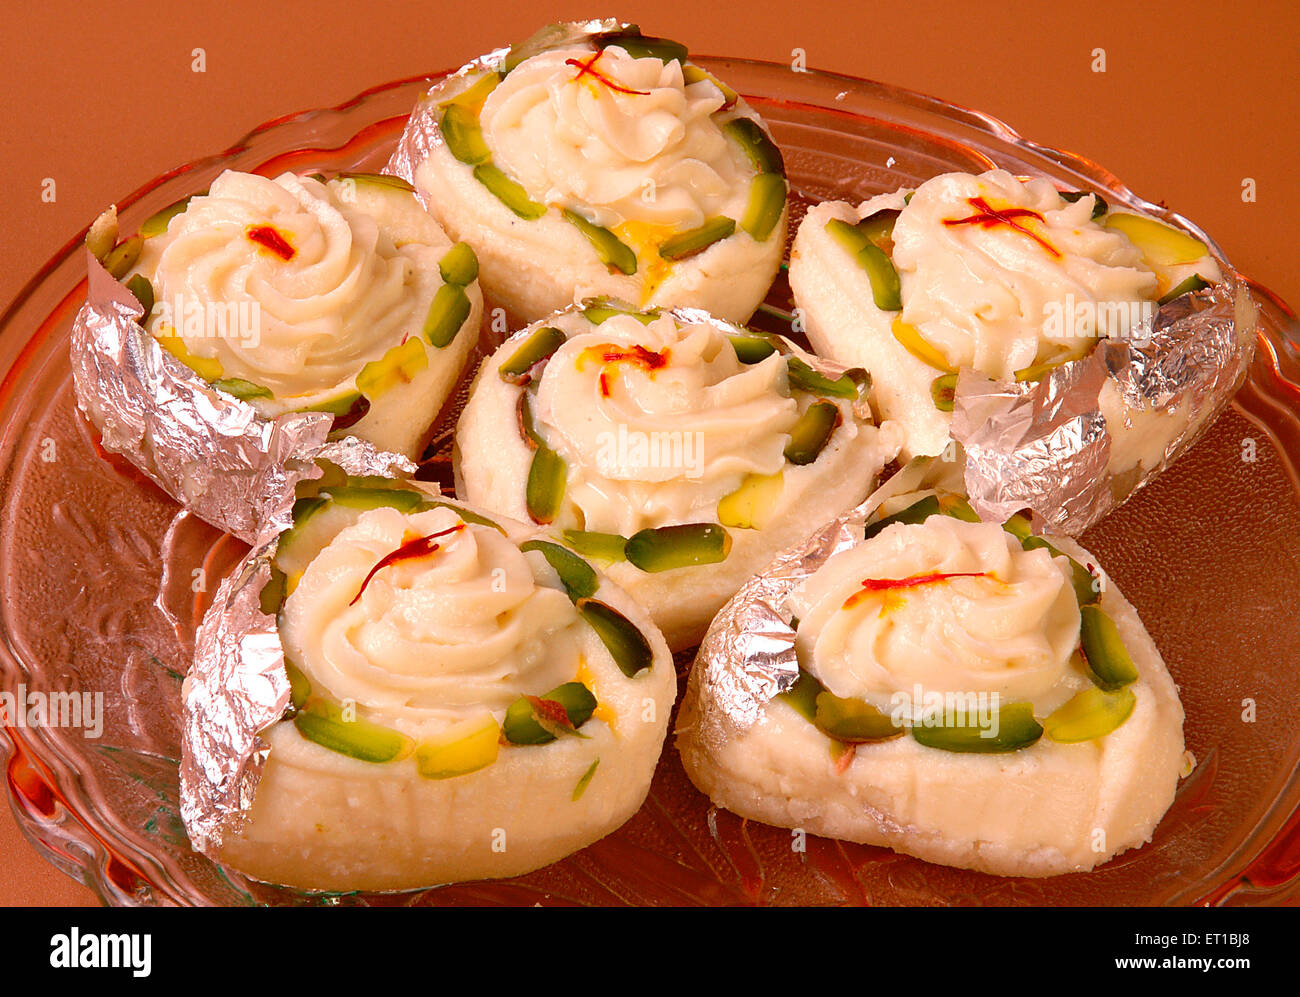 Sweet ; bengali mithai rajbhog served in plate ; Jodhpur ; Rajasthan ; India Stock Photo